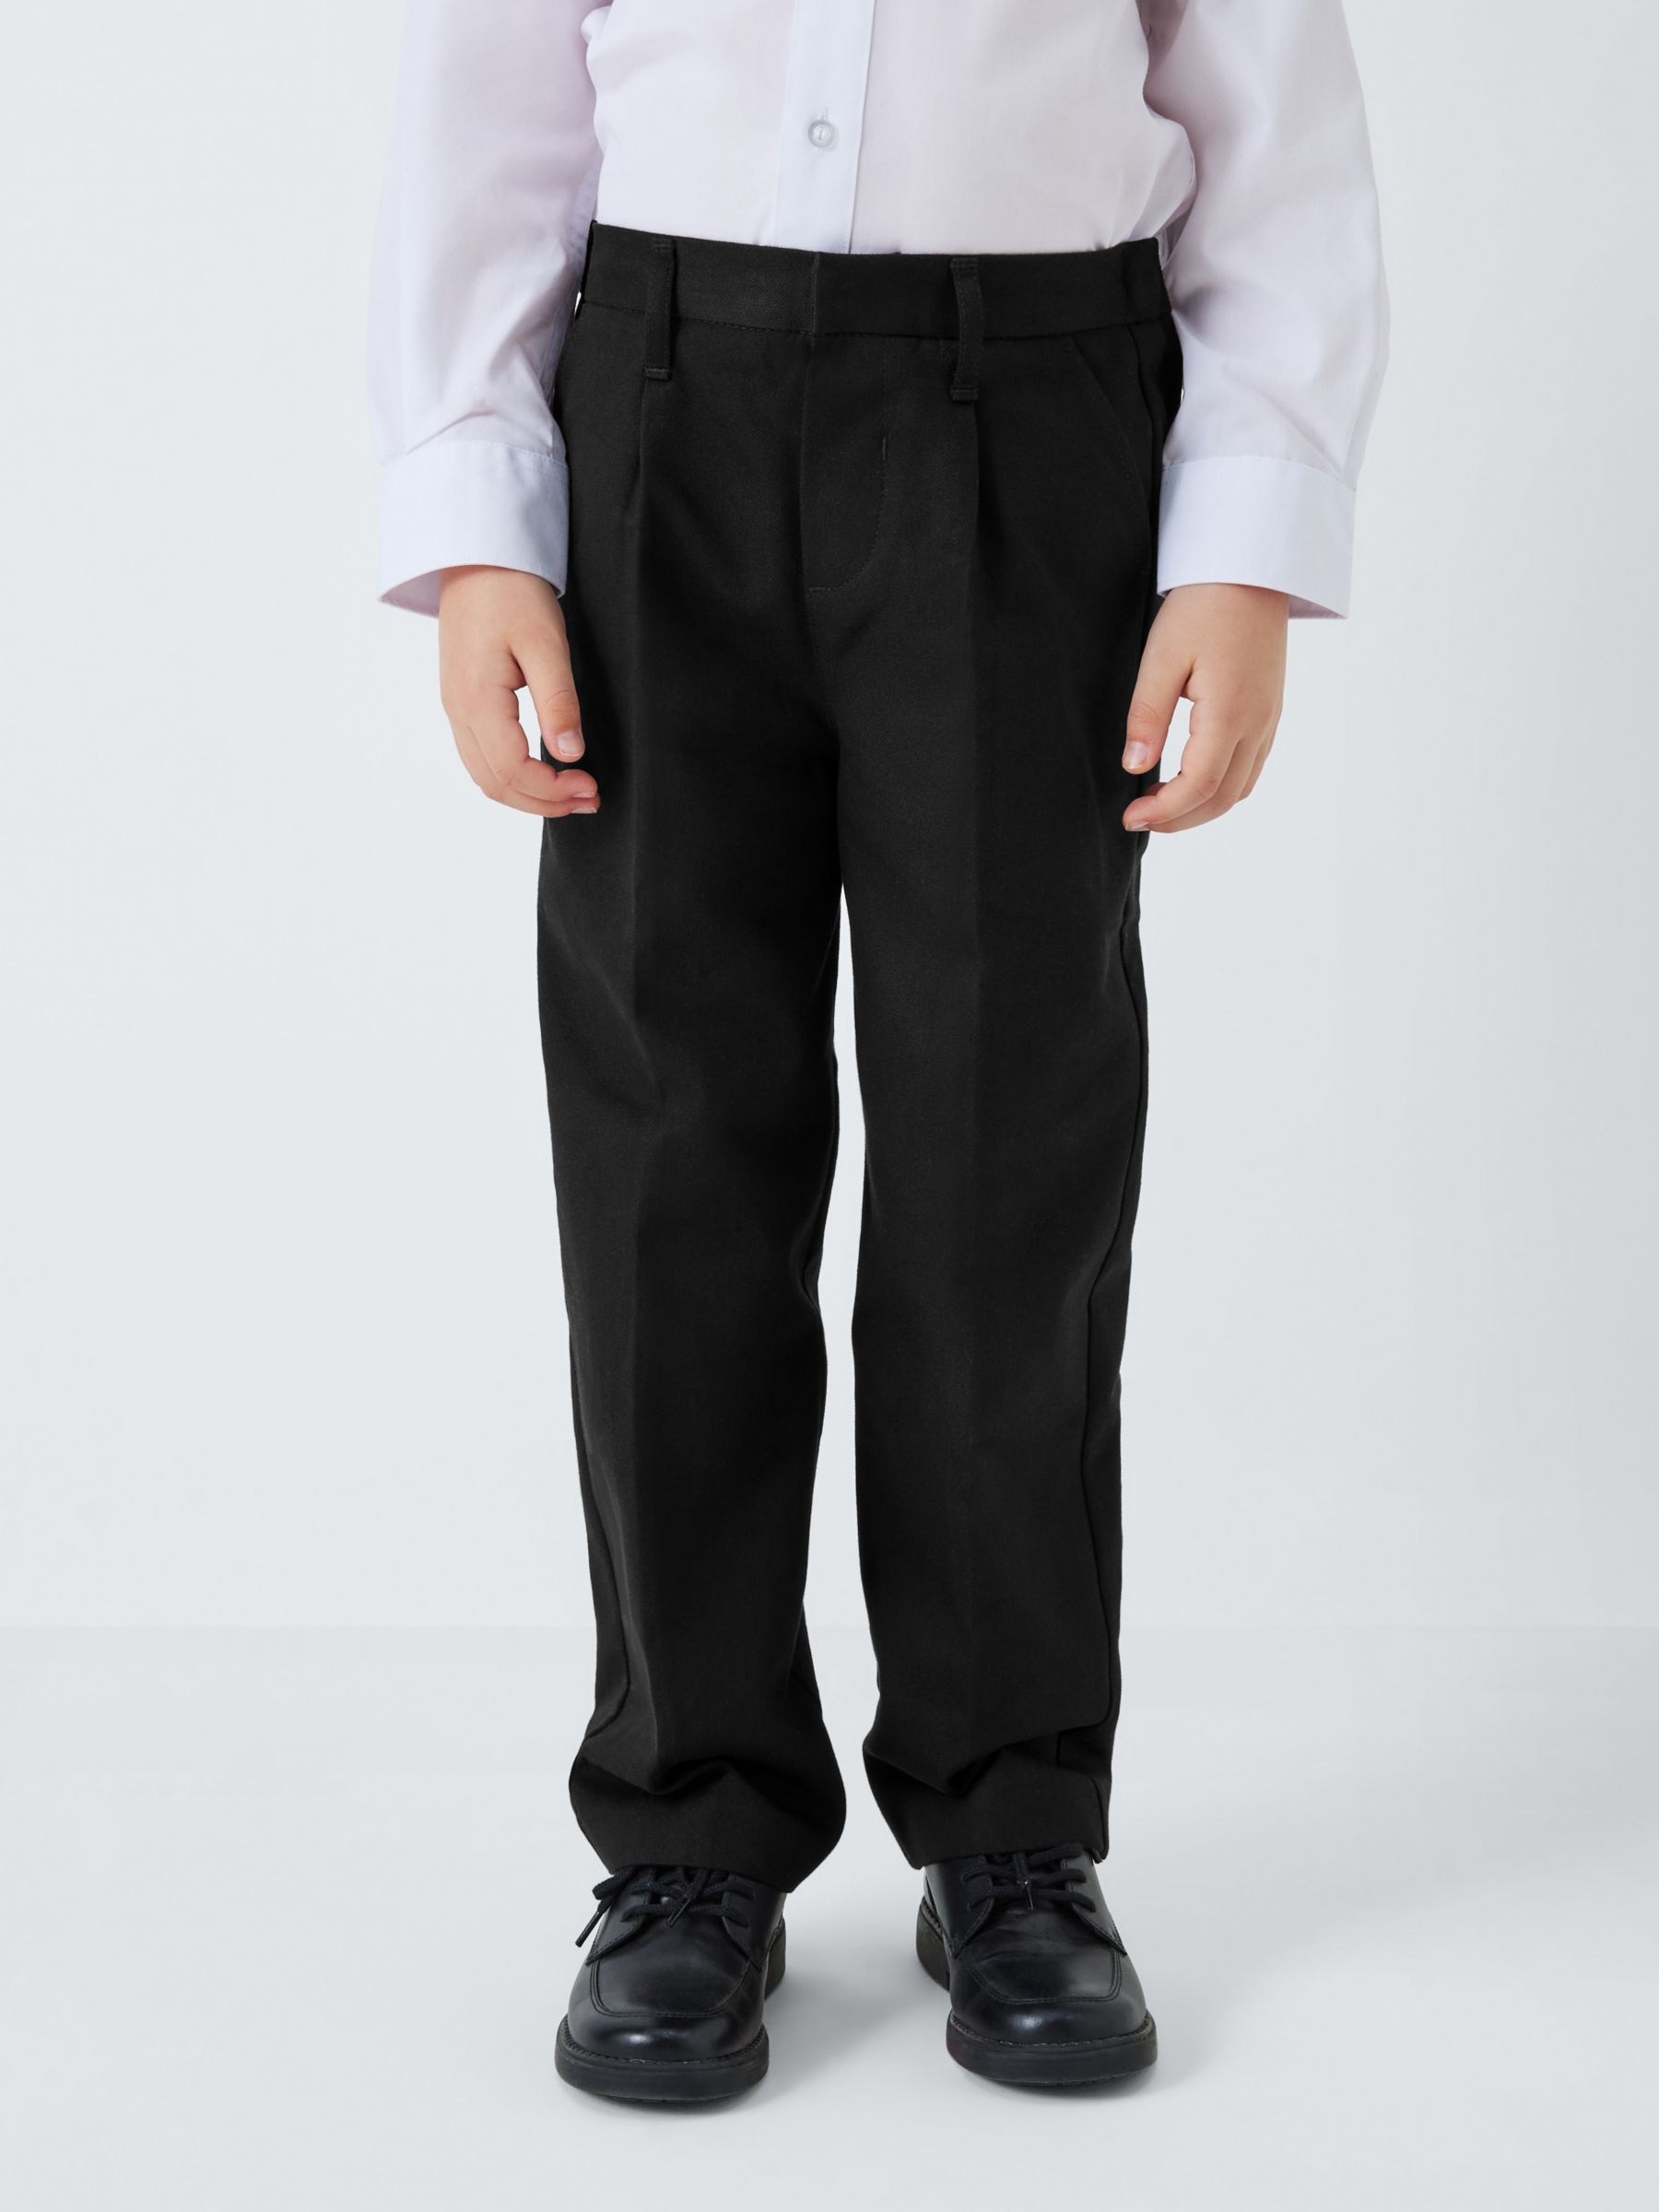 John Lewis Boys' Adjustable Waist Straight Leg Cotton School Trousers, Black, 3 years